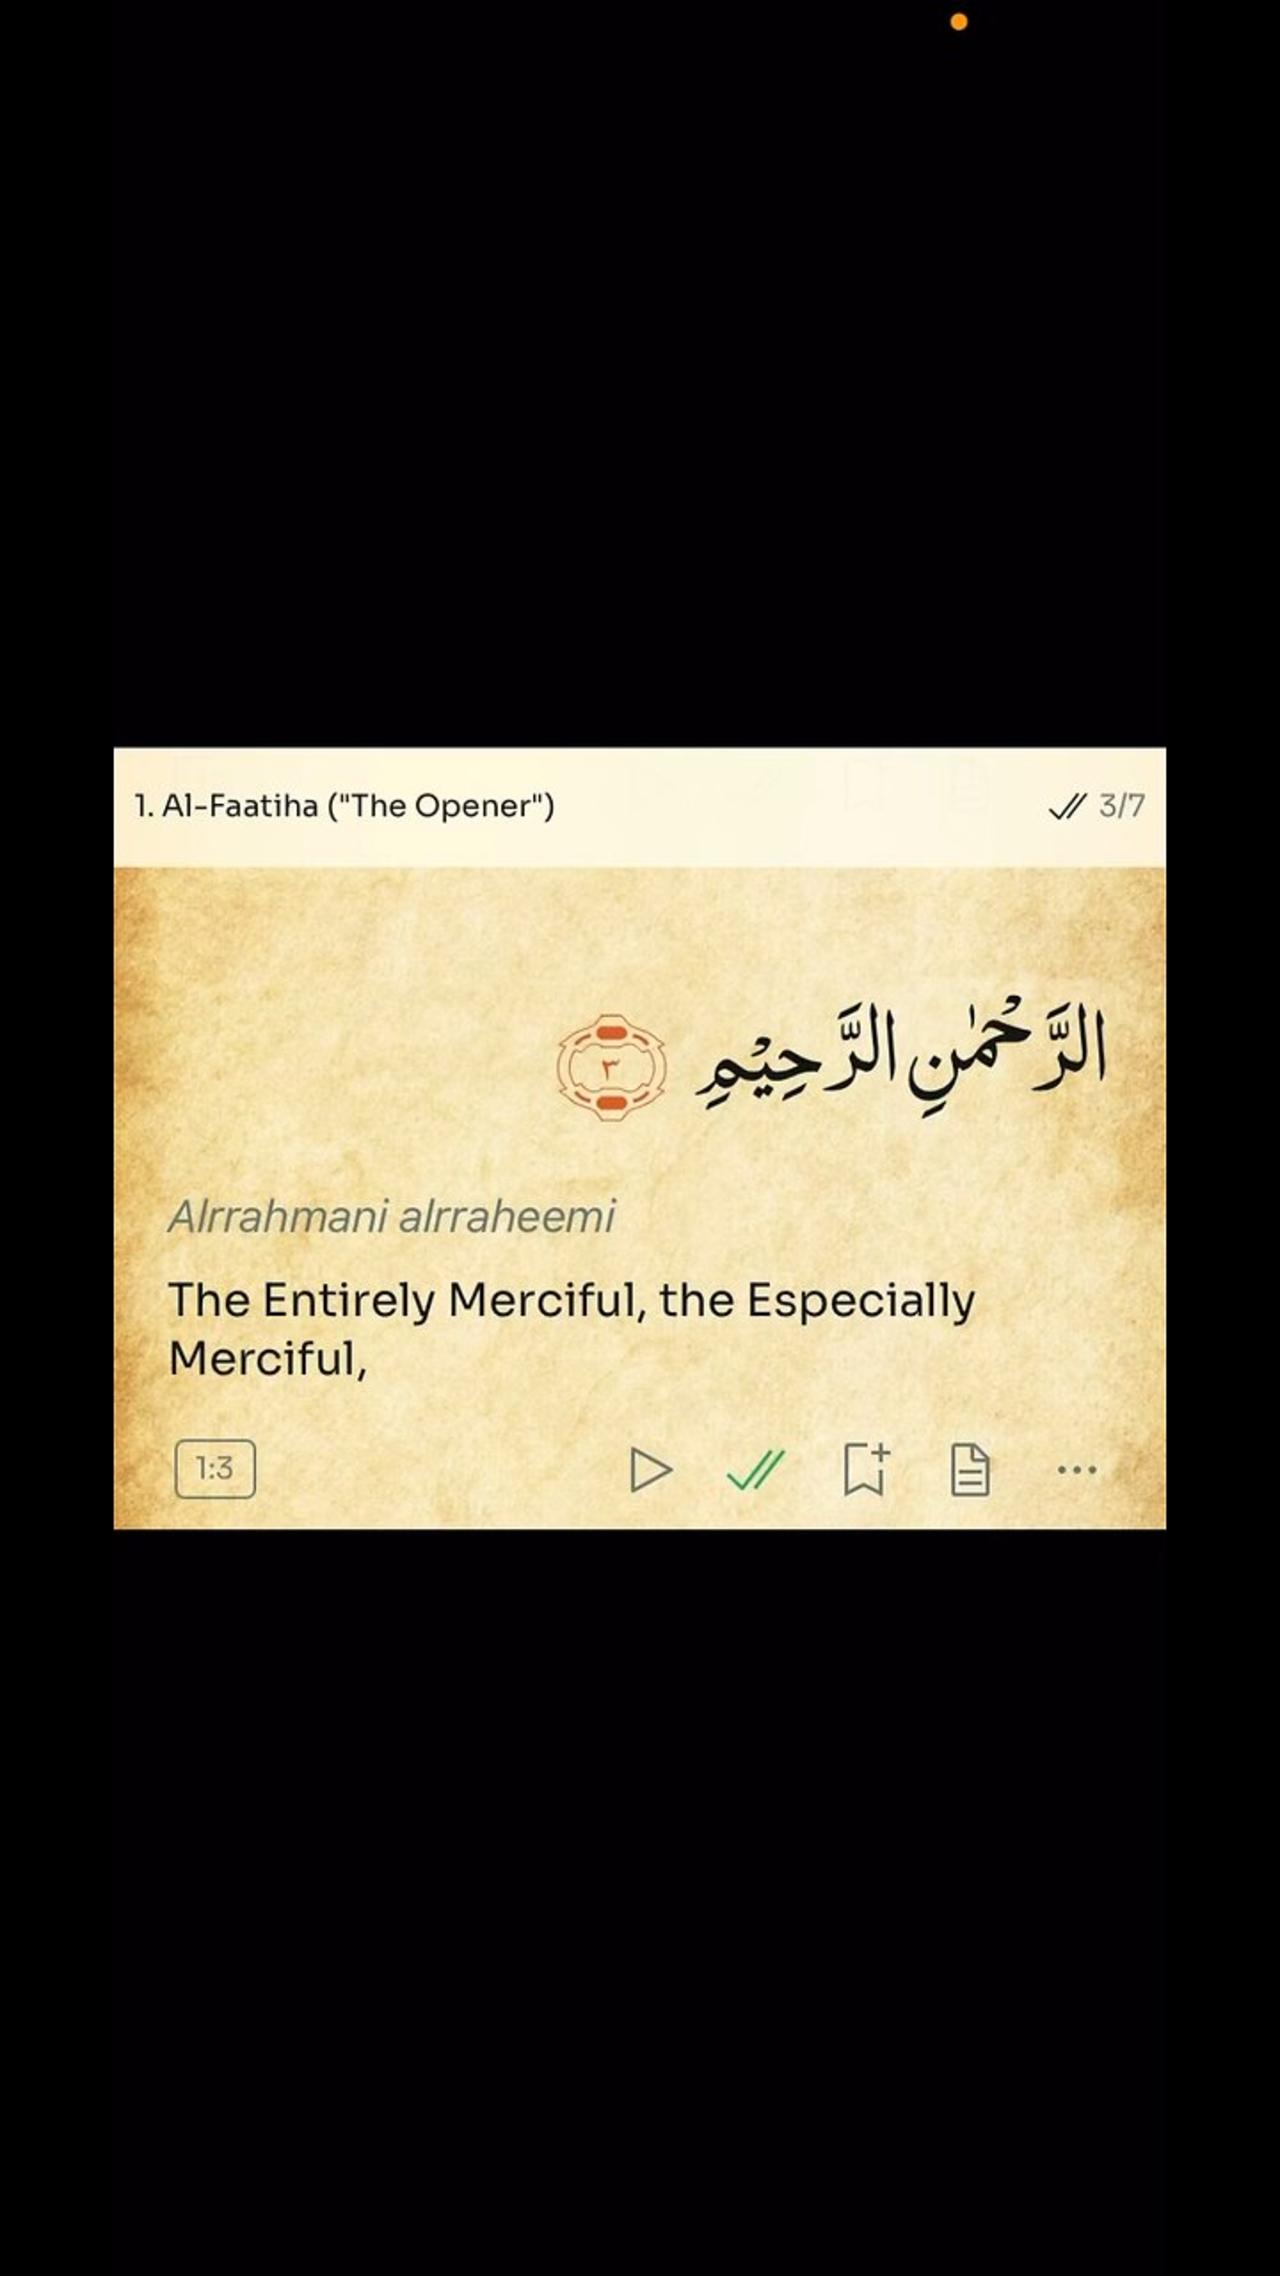 The Quran: Surah Al-Faatiha Verse 3